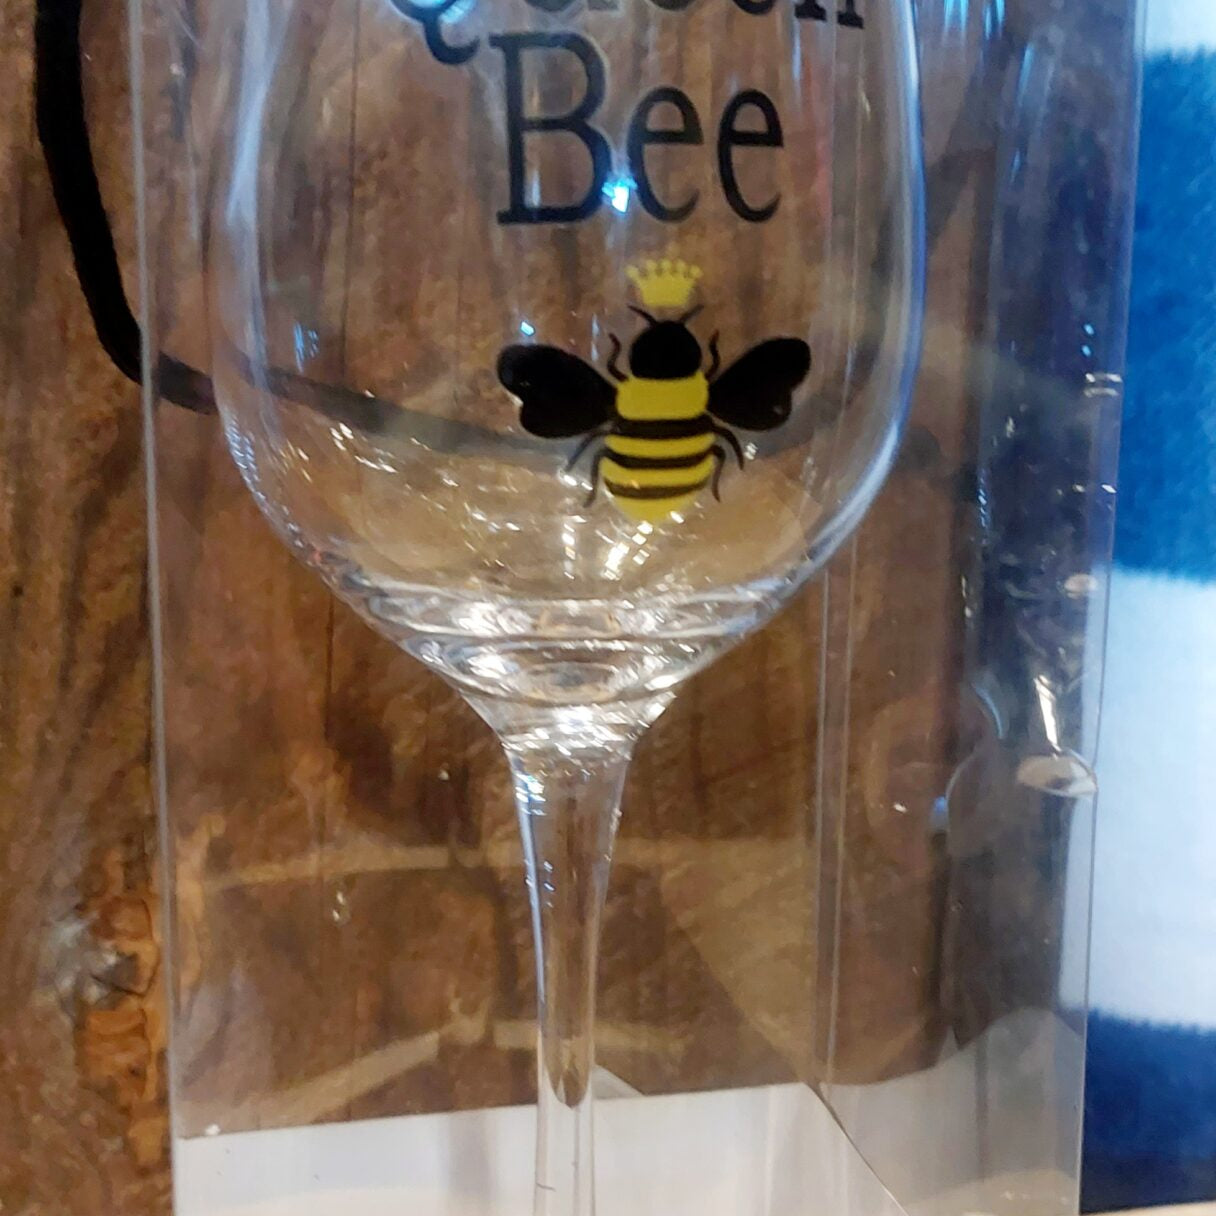 BEE WINE GLASS